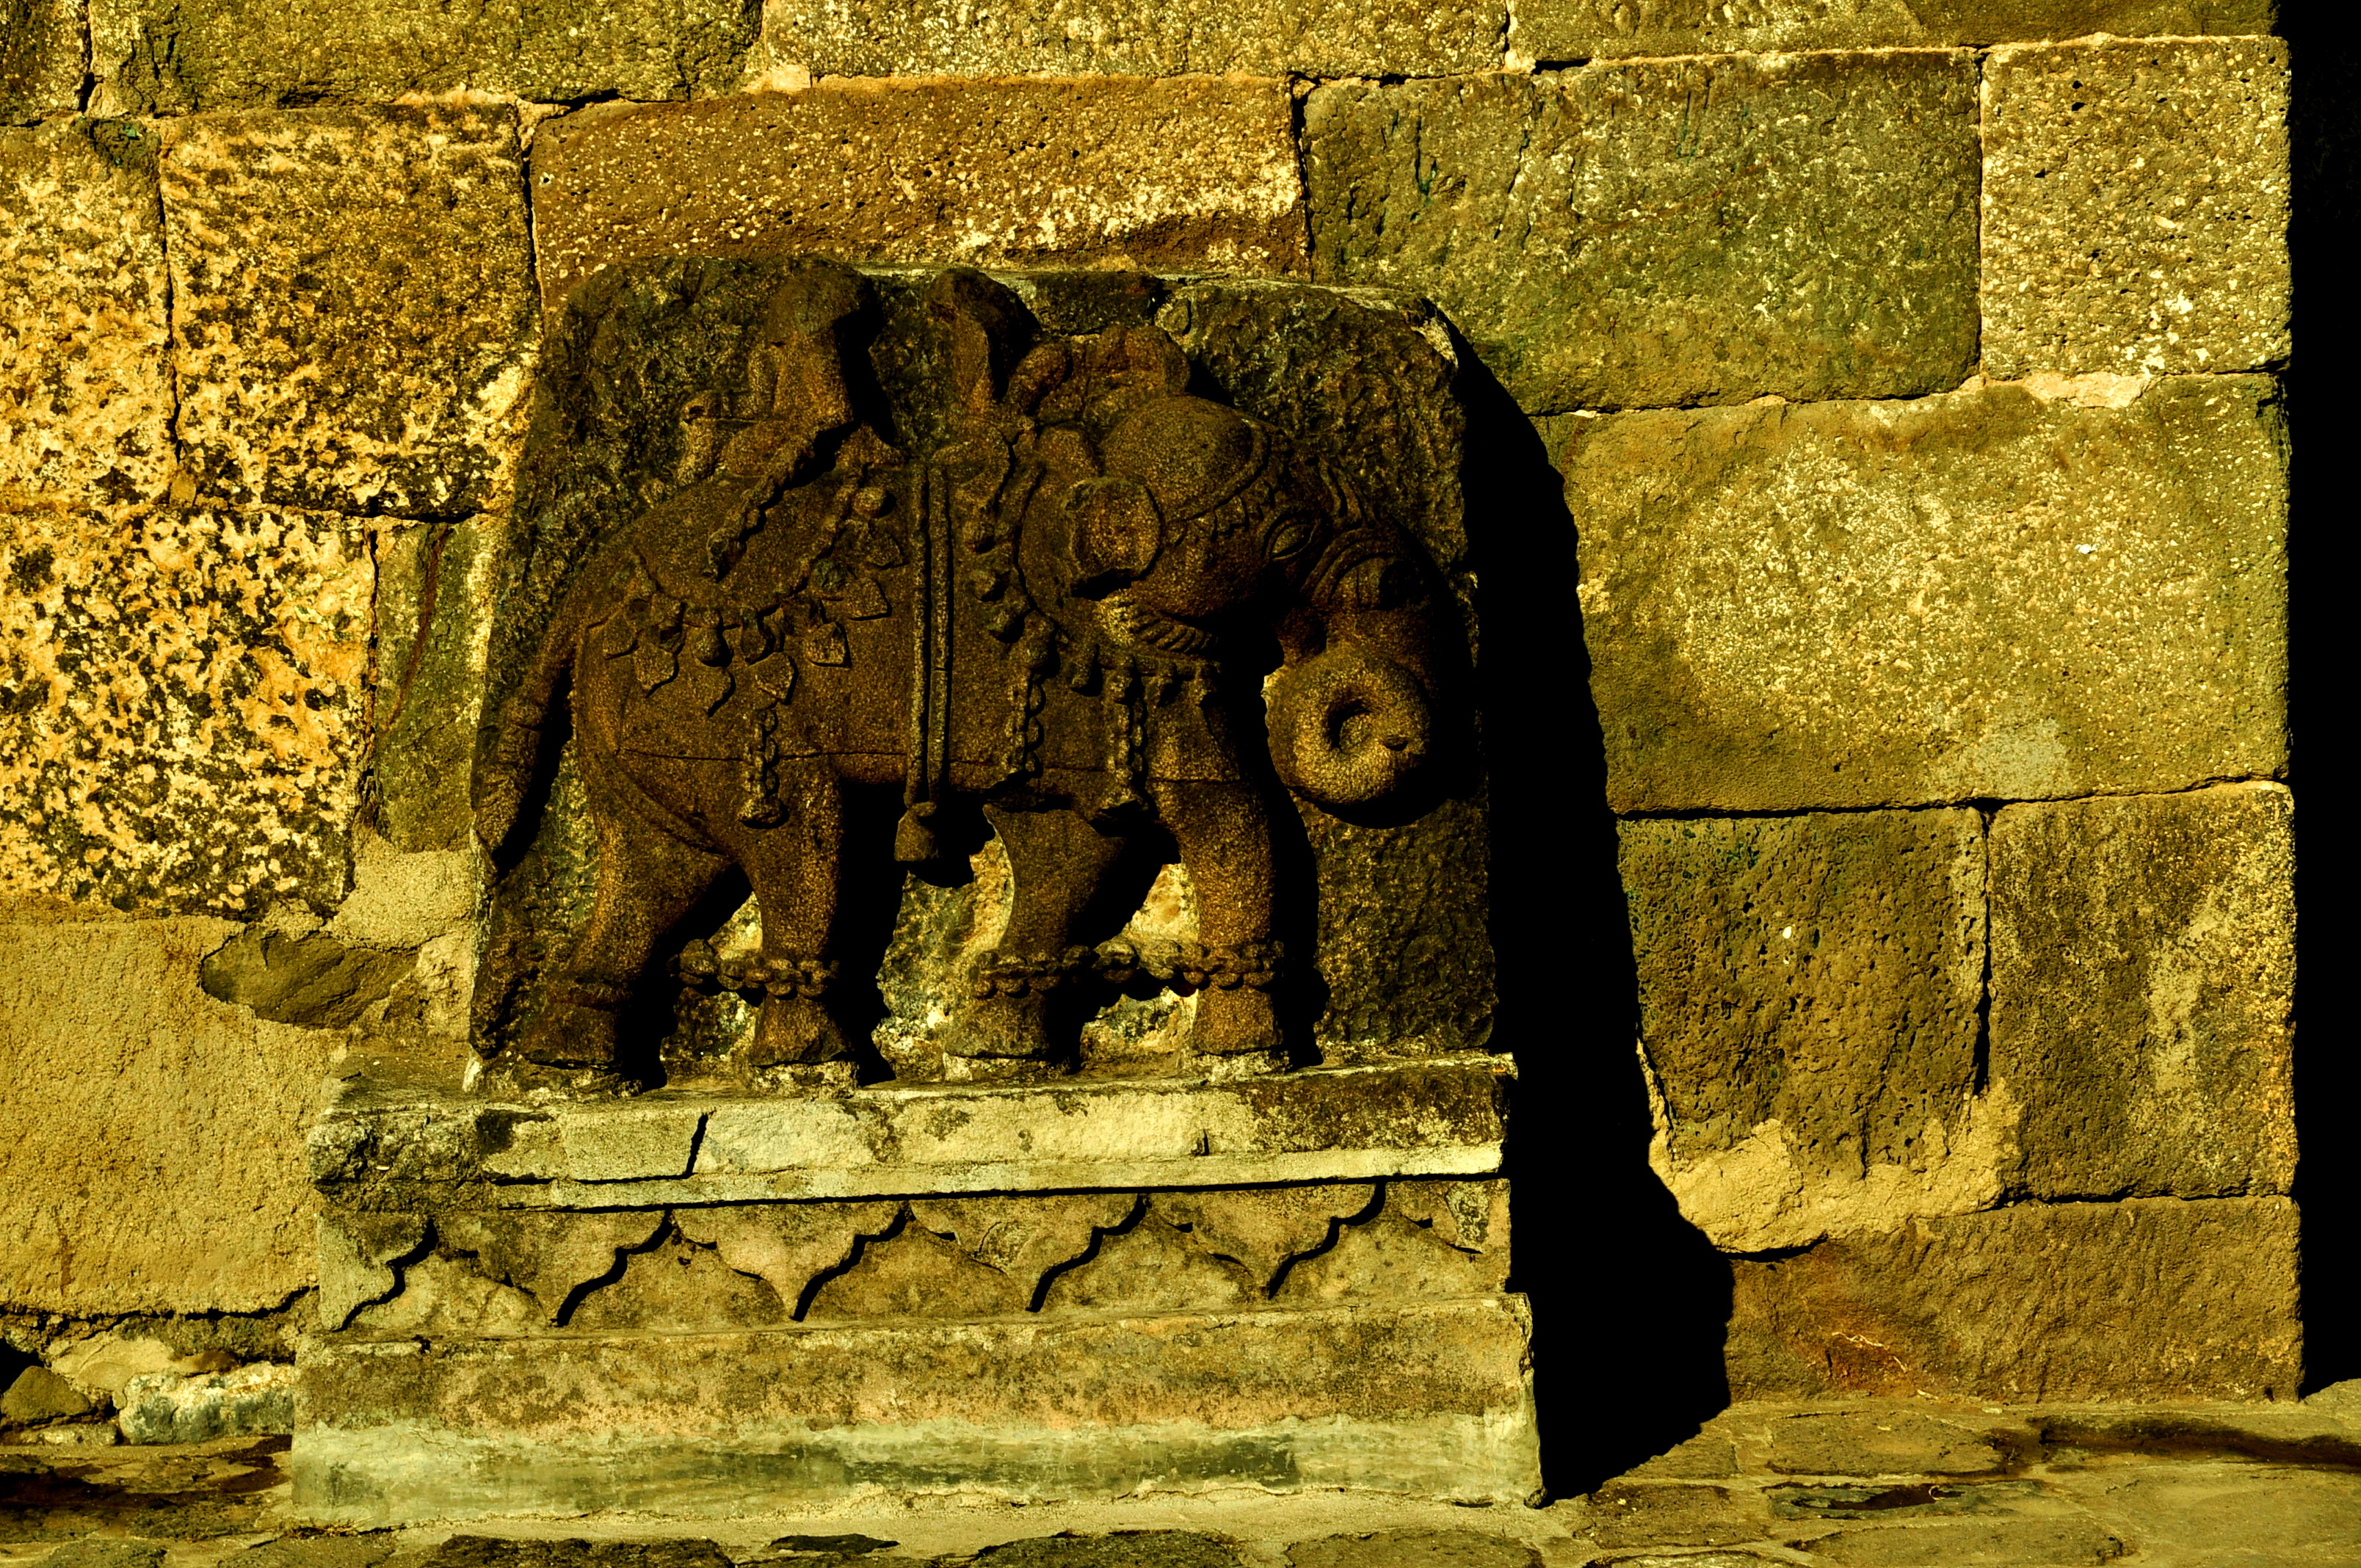 Elephant carvings at Daulatabad